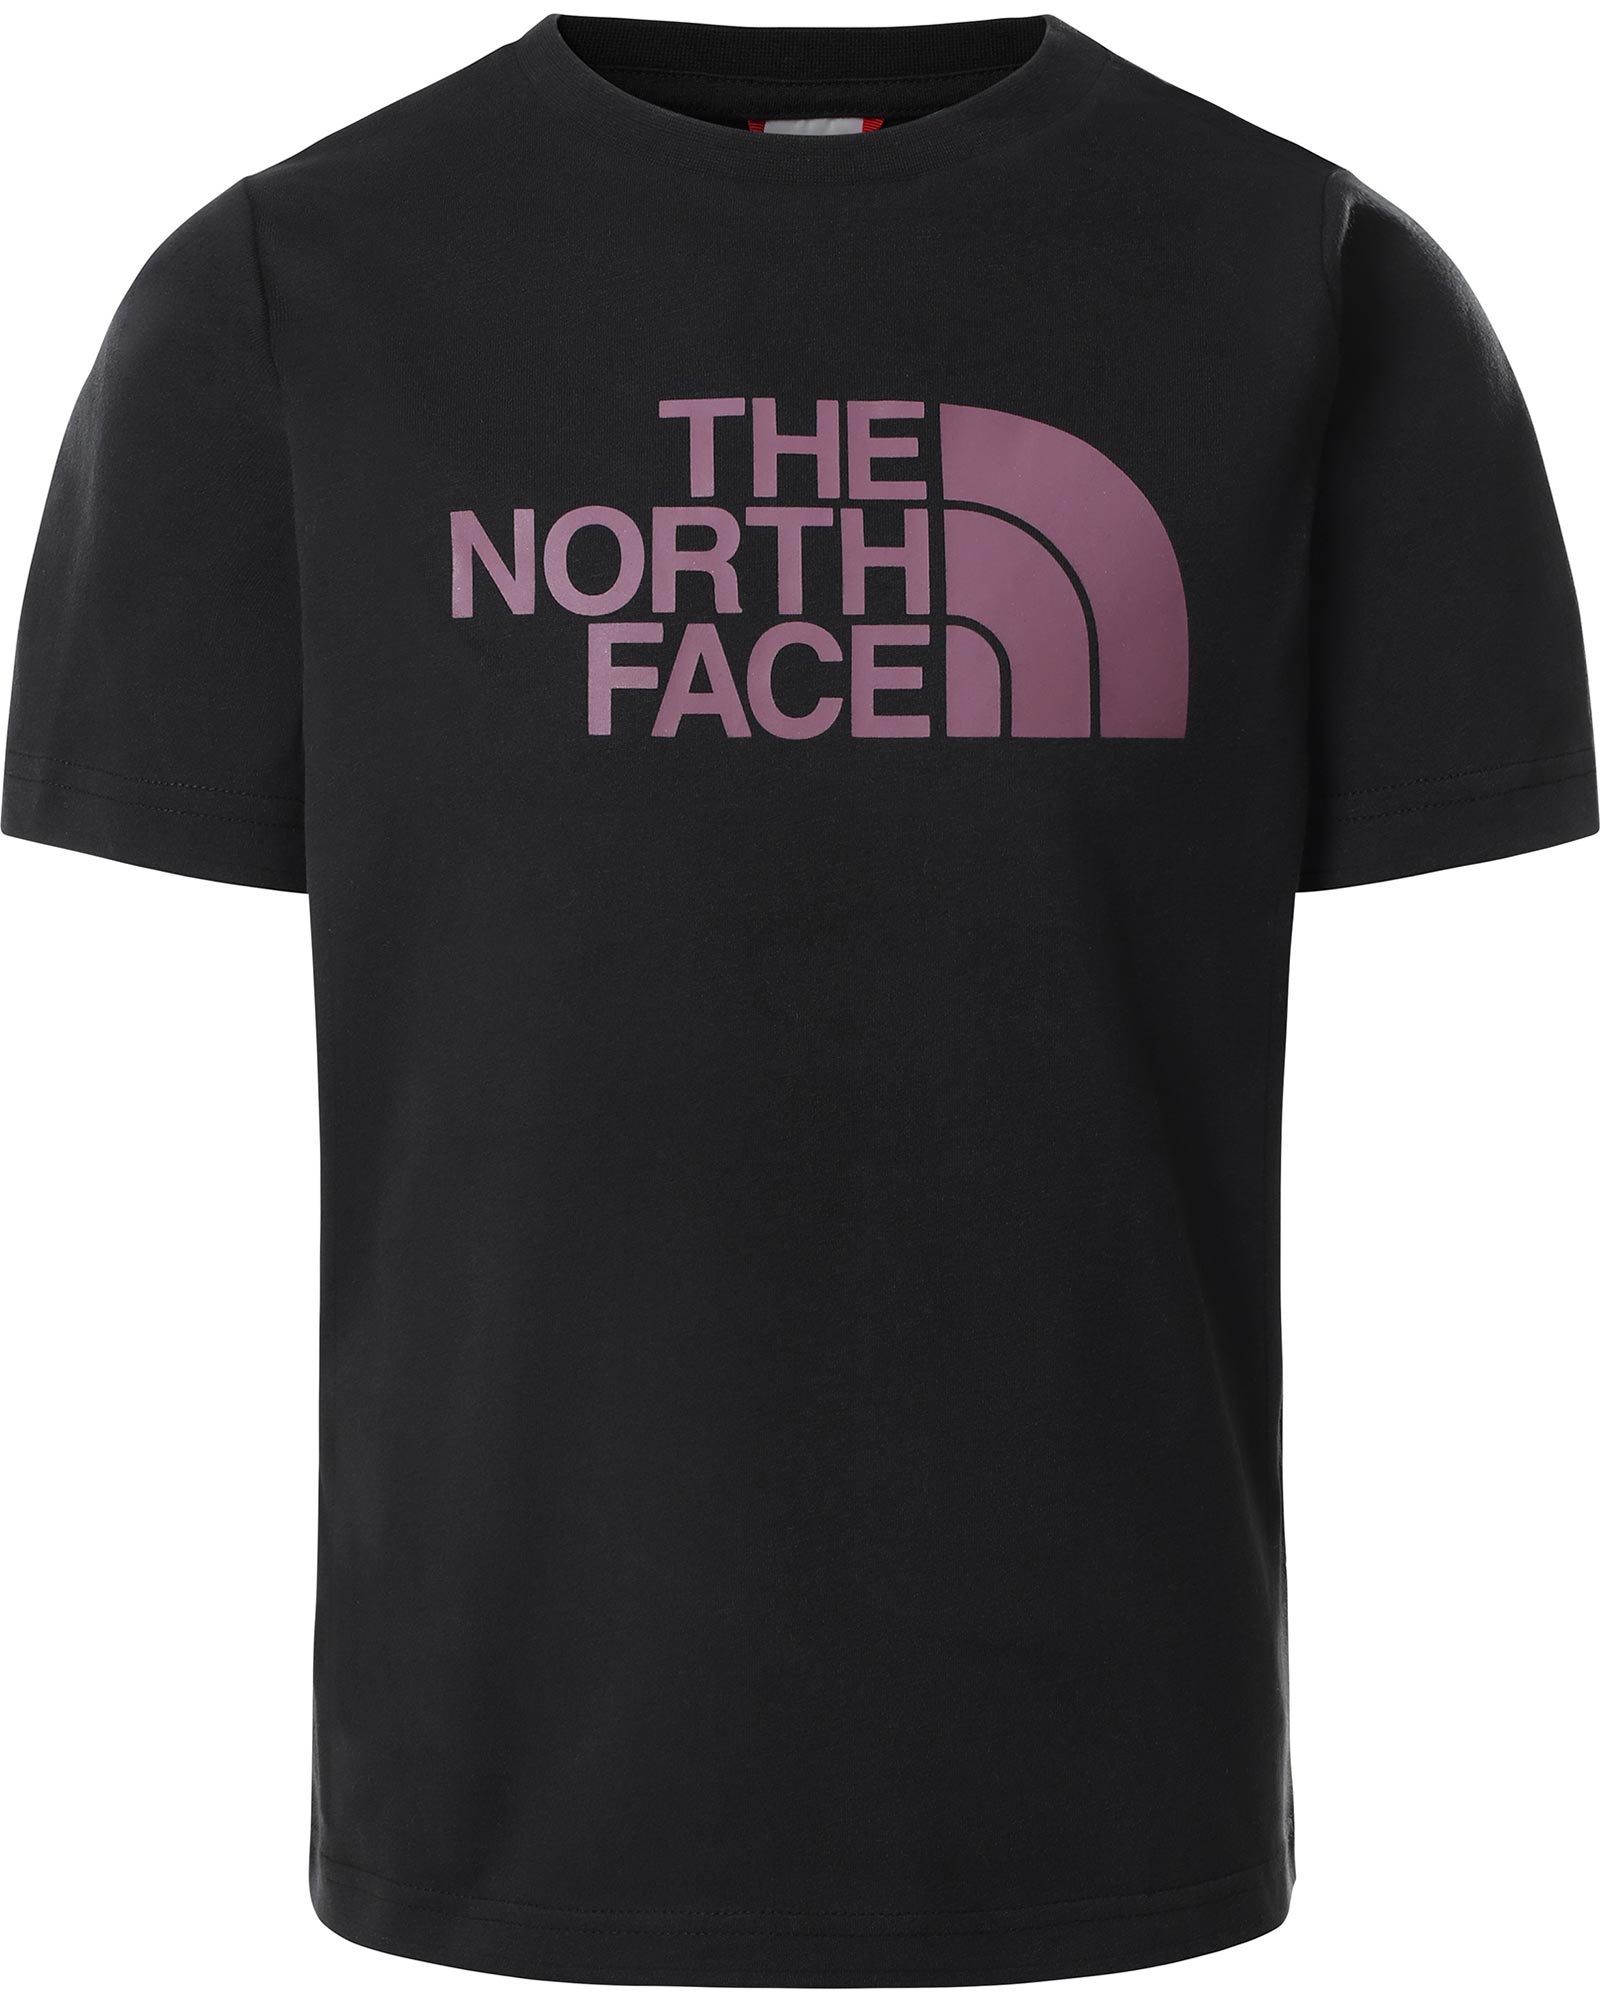 The North Face Easy Boyfriend Girls’ T Shirt - TNF Black/Pikes Purple L